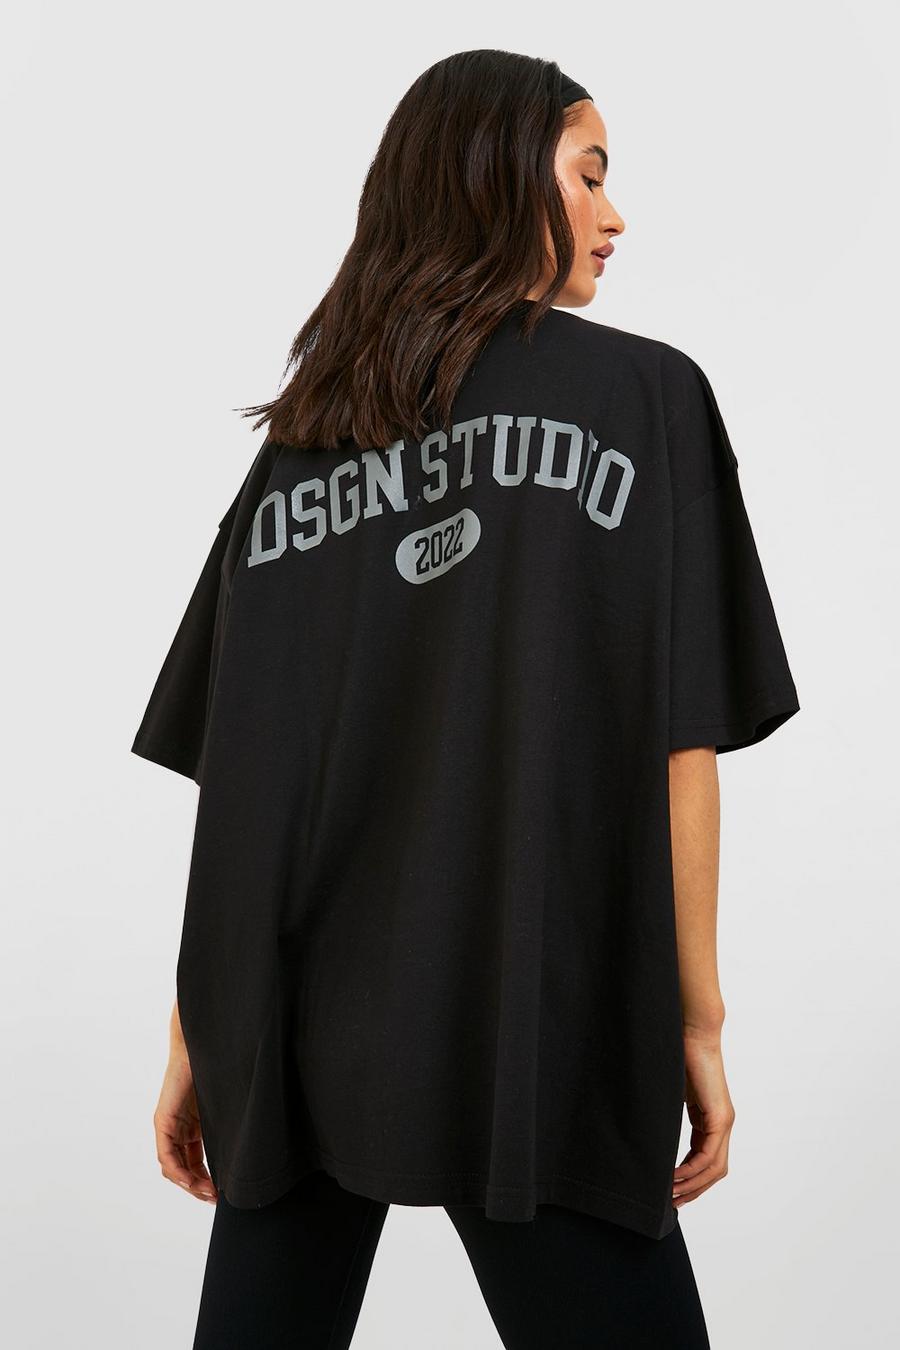 Black Dsgn Studio Back Print Oversized T-shirt hoodies image number 1